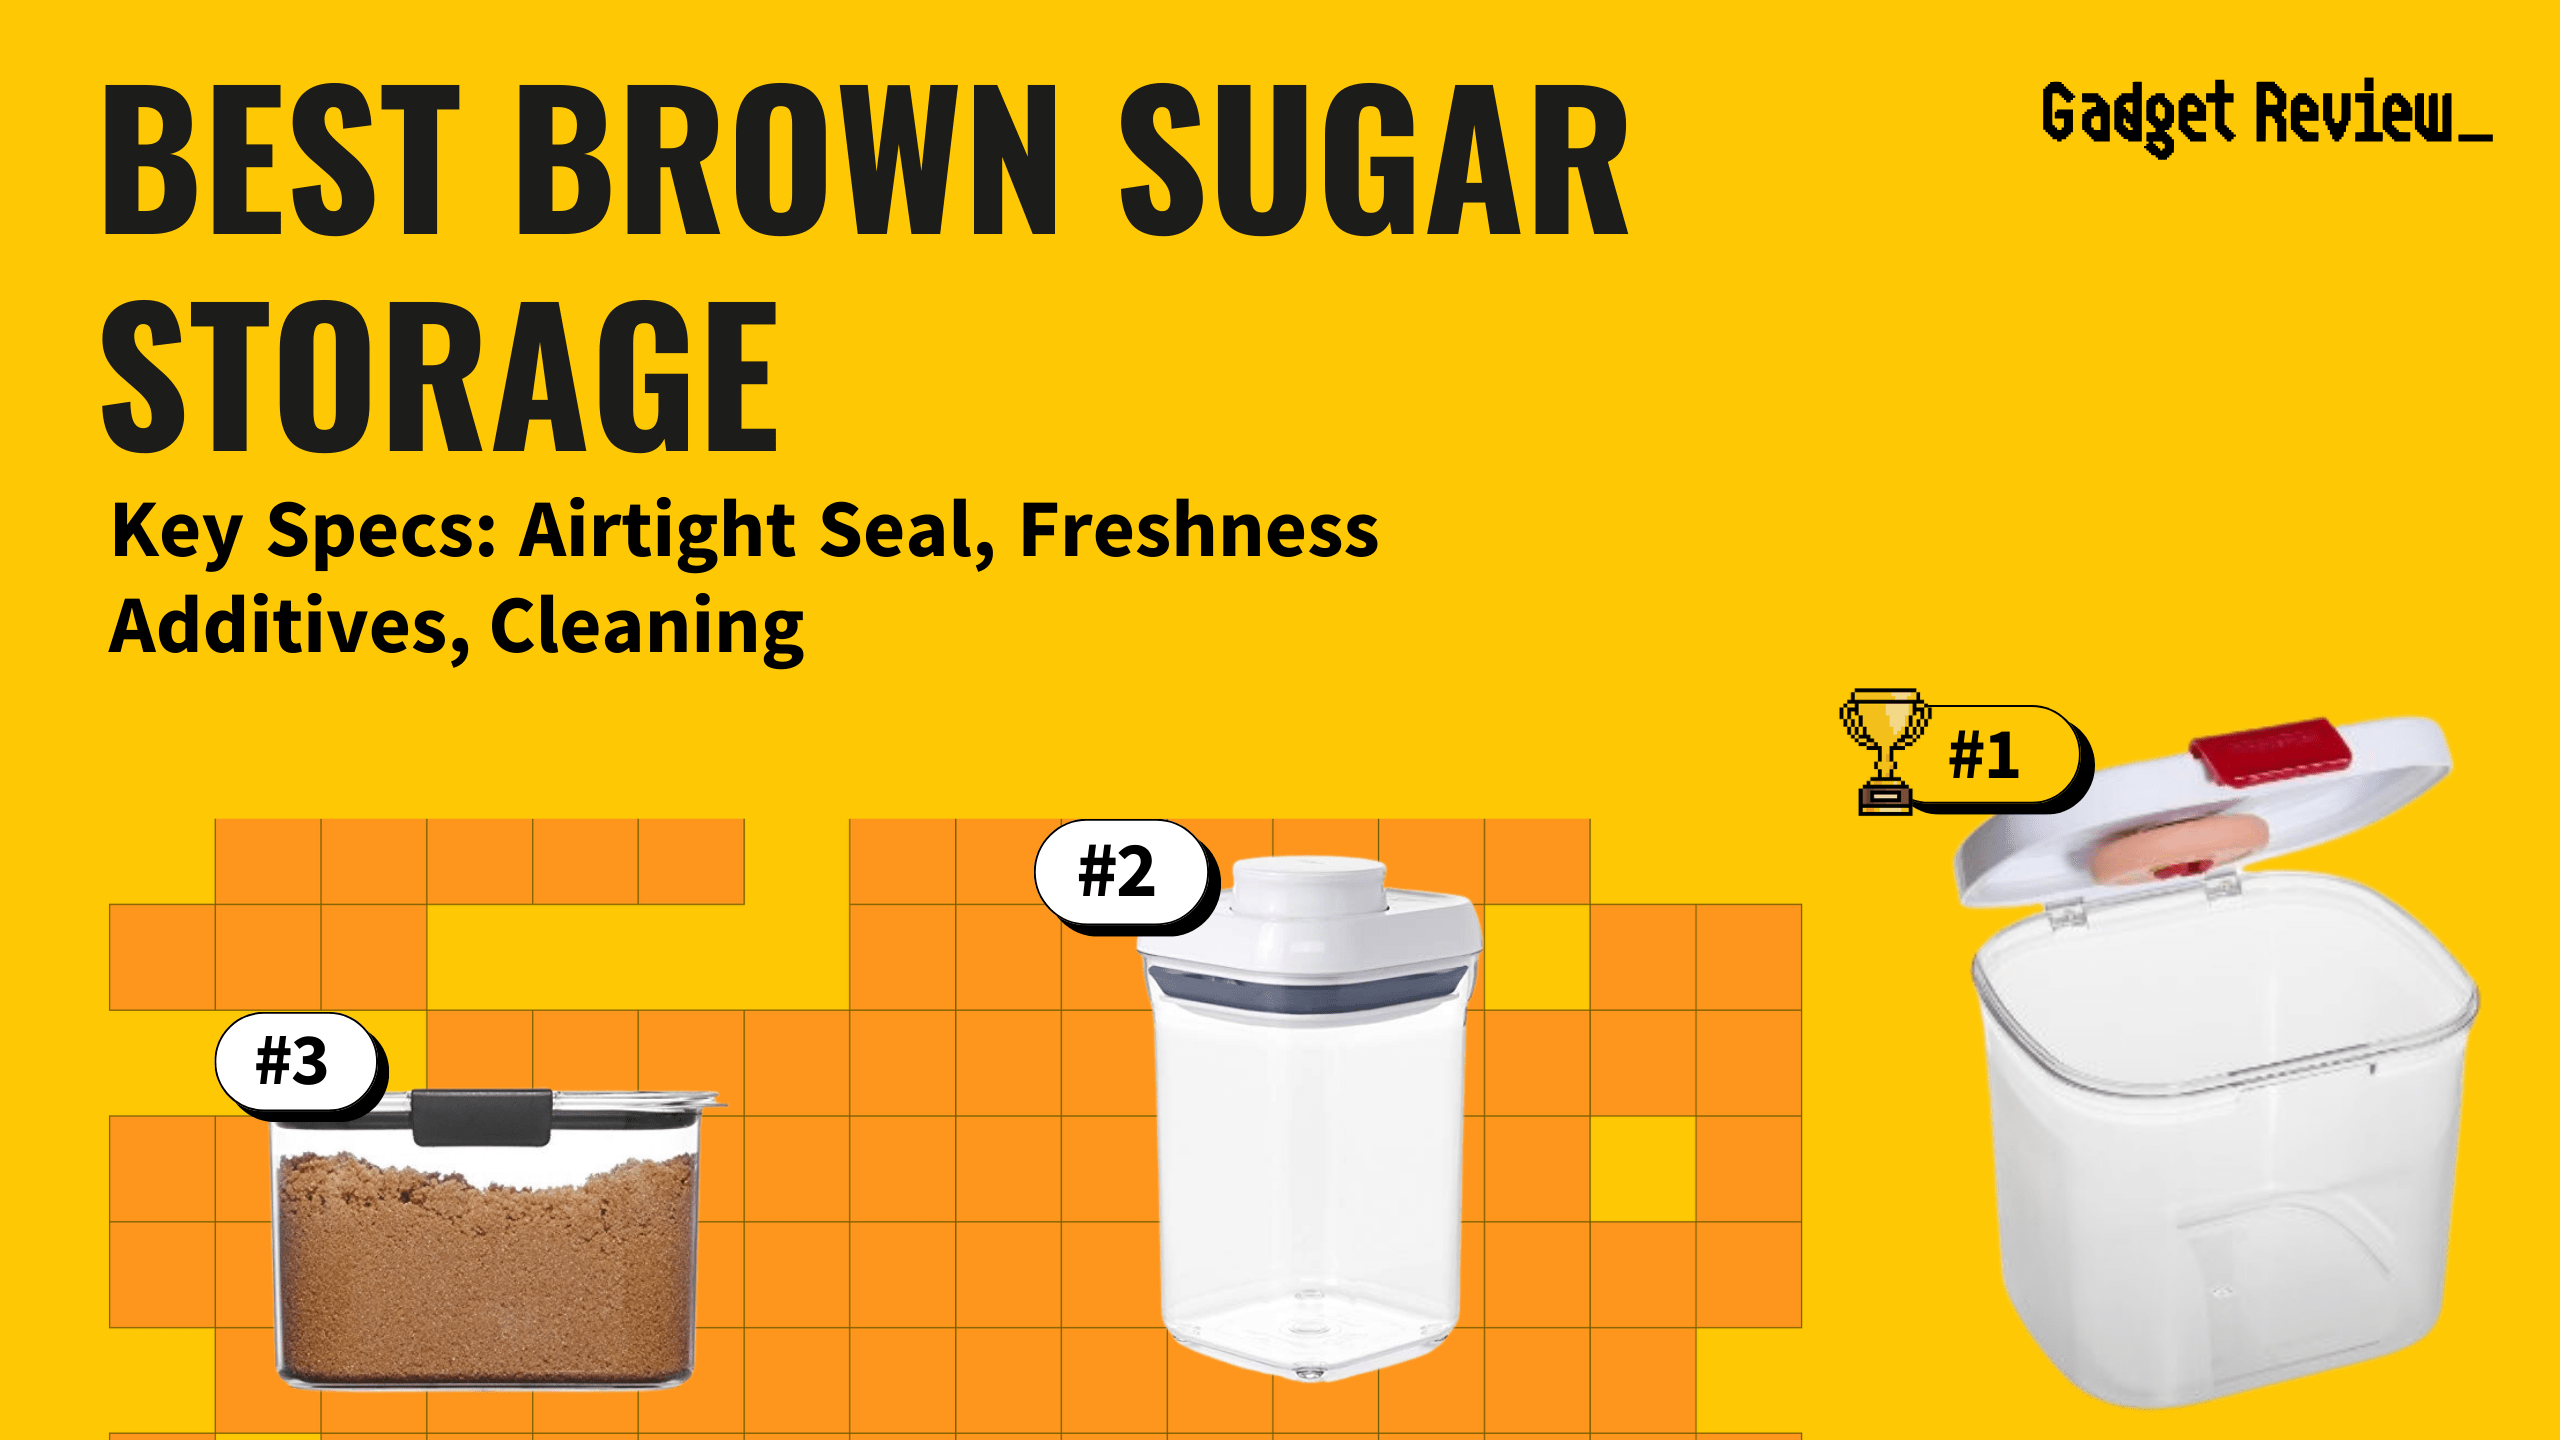 Best Container to Keep Brown Sugar Soft: Progressive Sugar